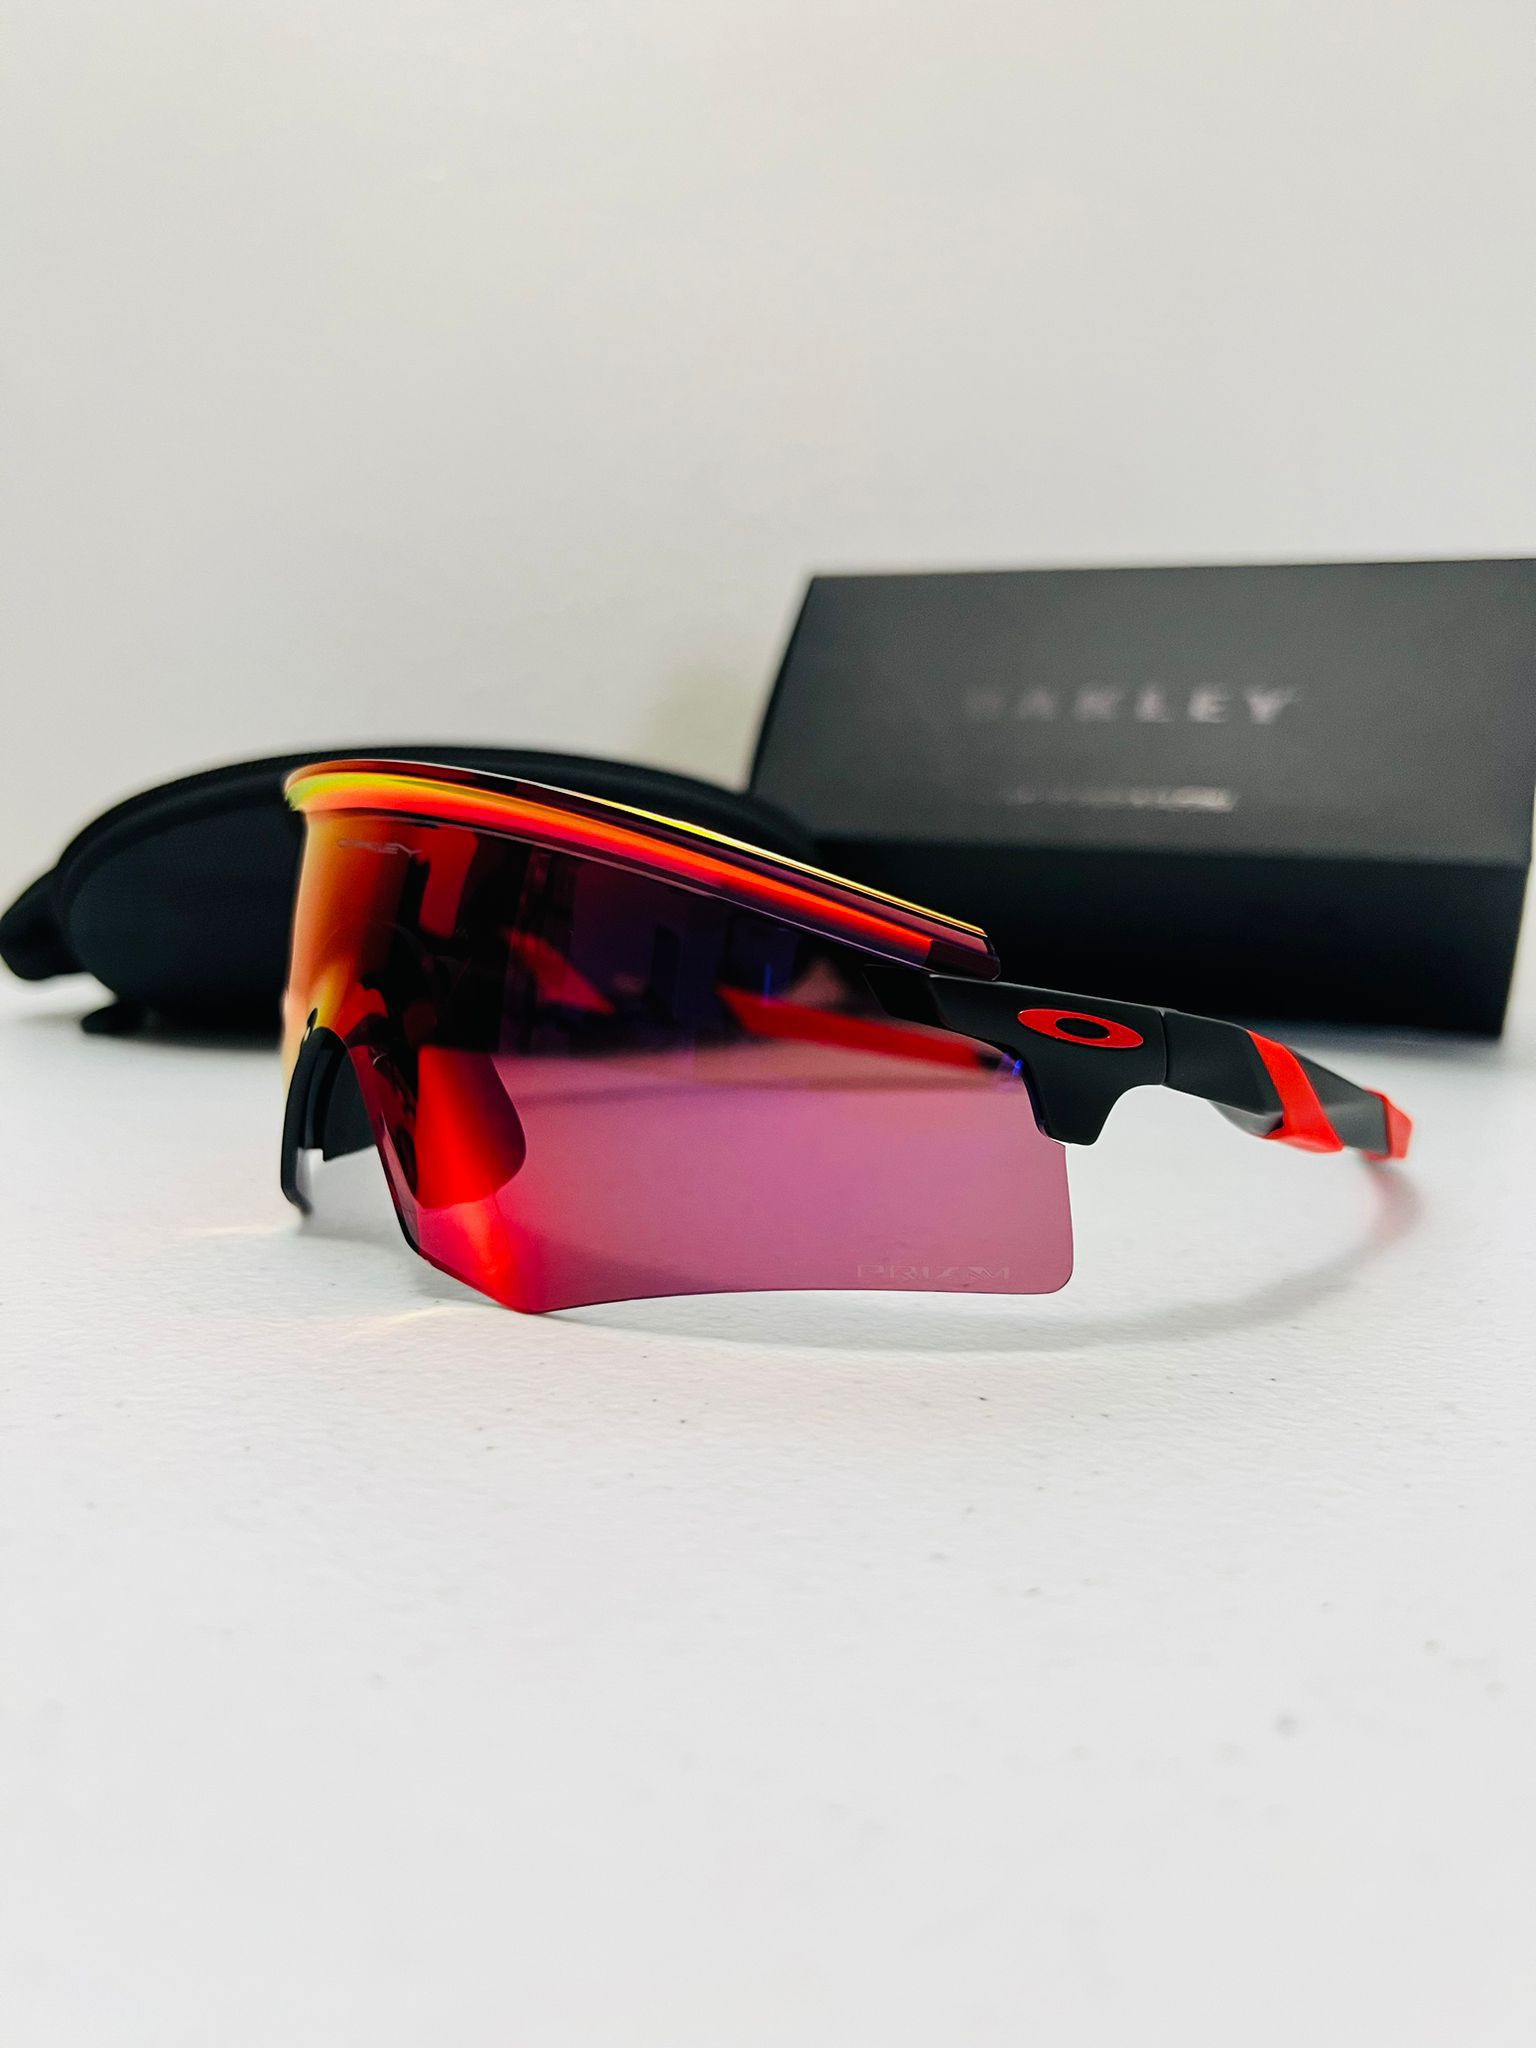 NEW Polarized PRIZM  ENCODER Sport Glasses Baseball/ Softball/ Golf/ Cycling / 